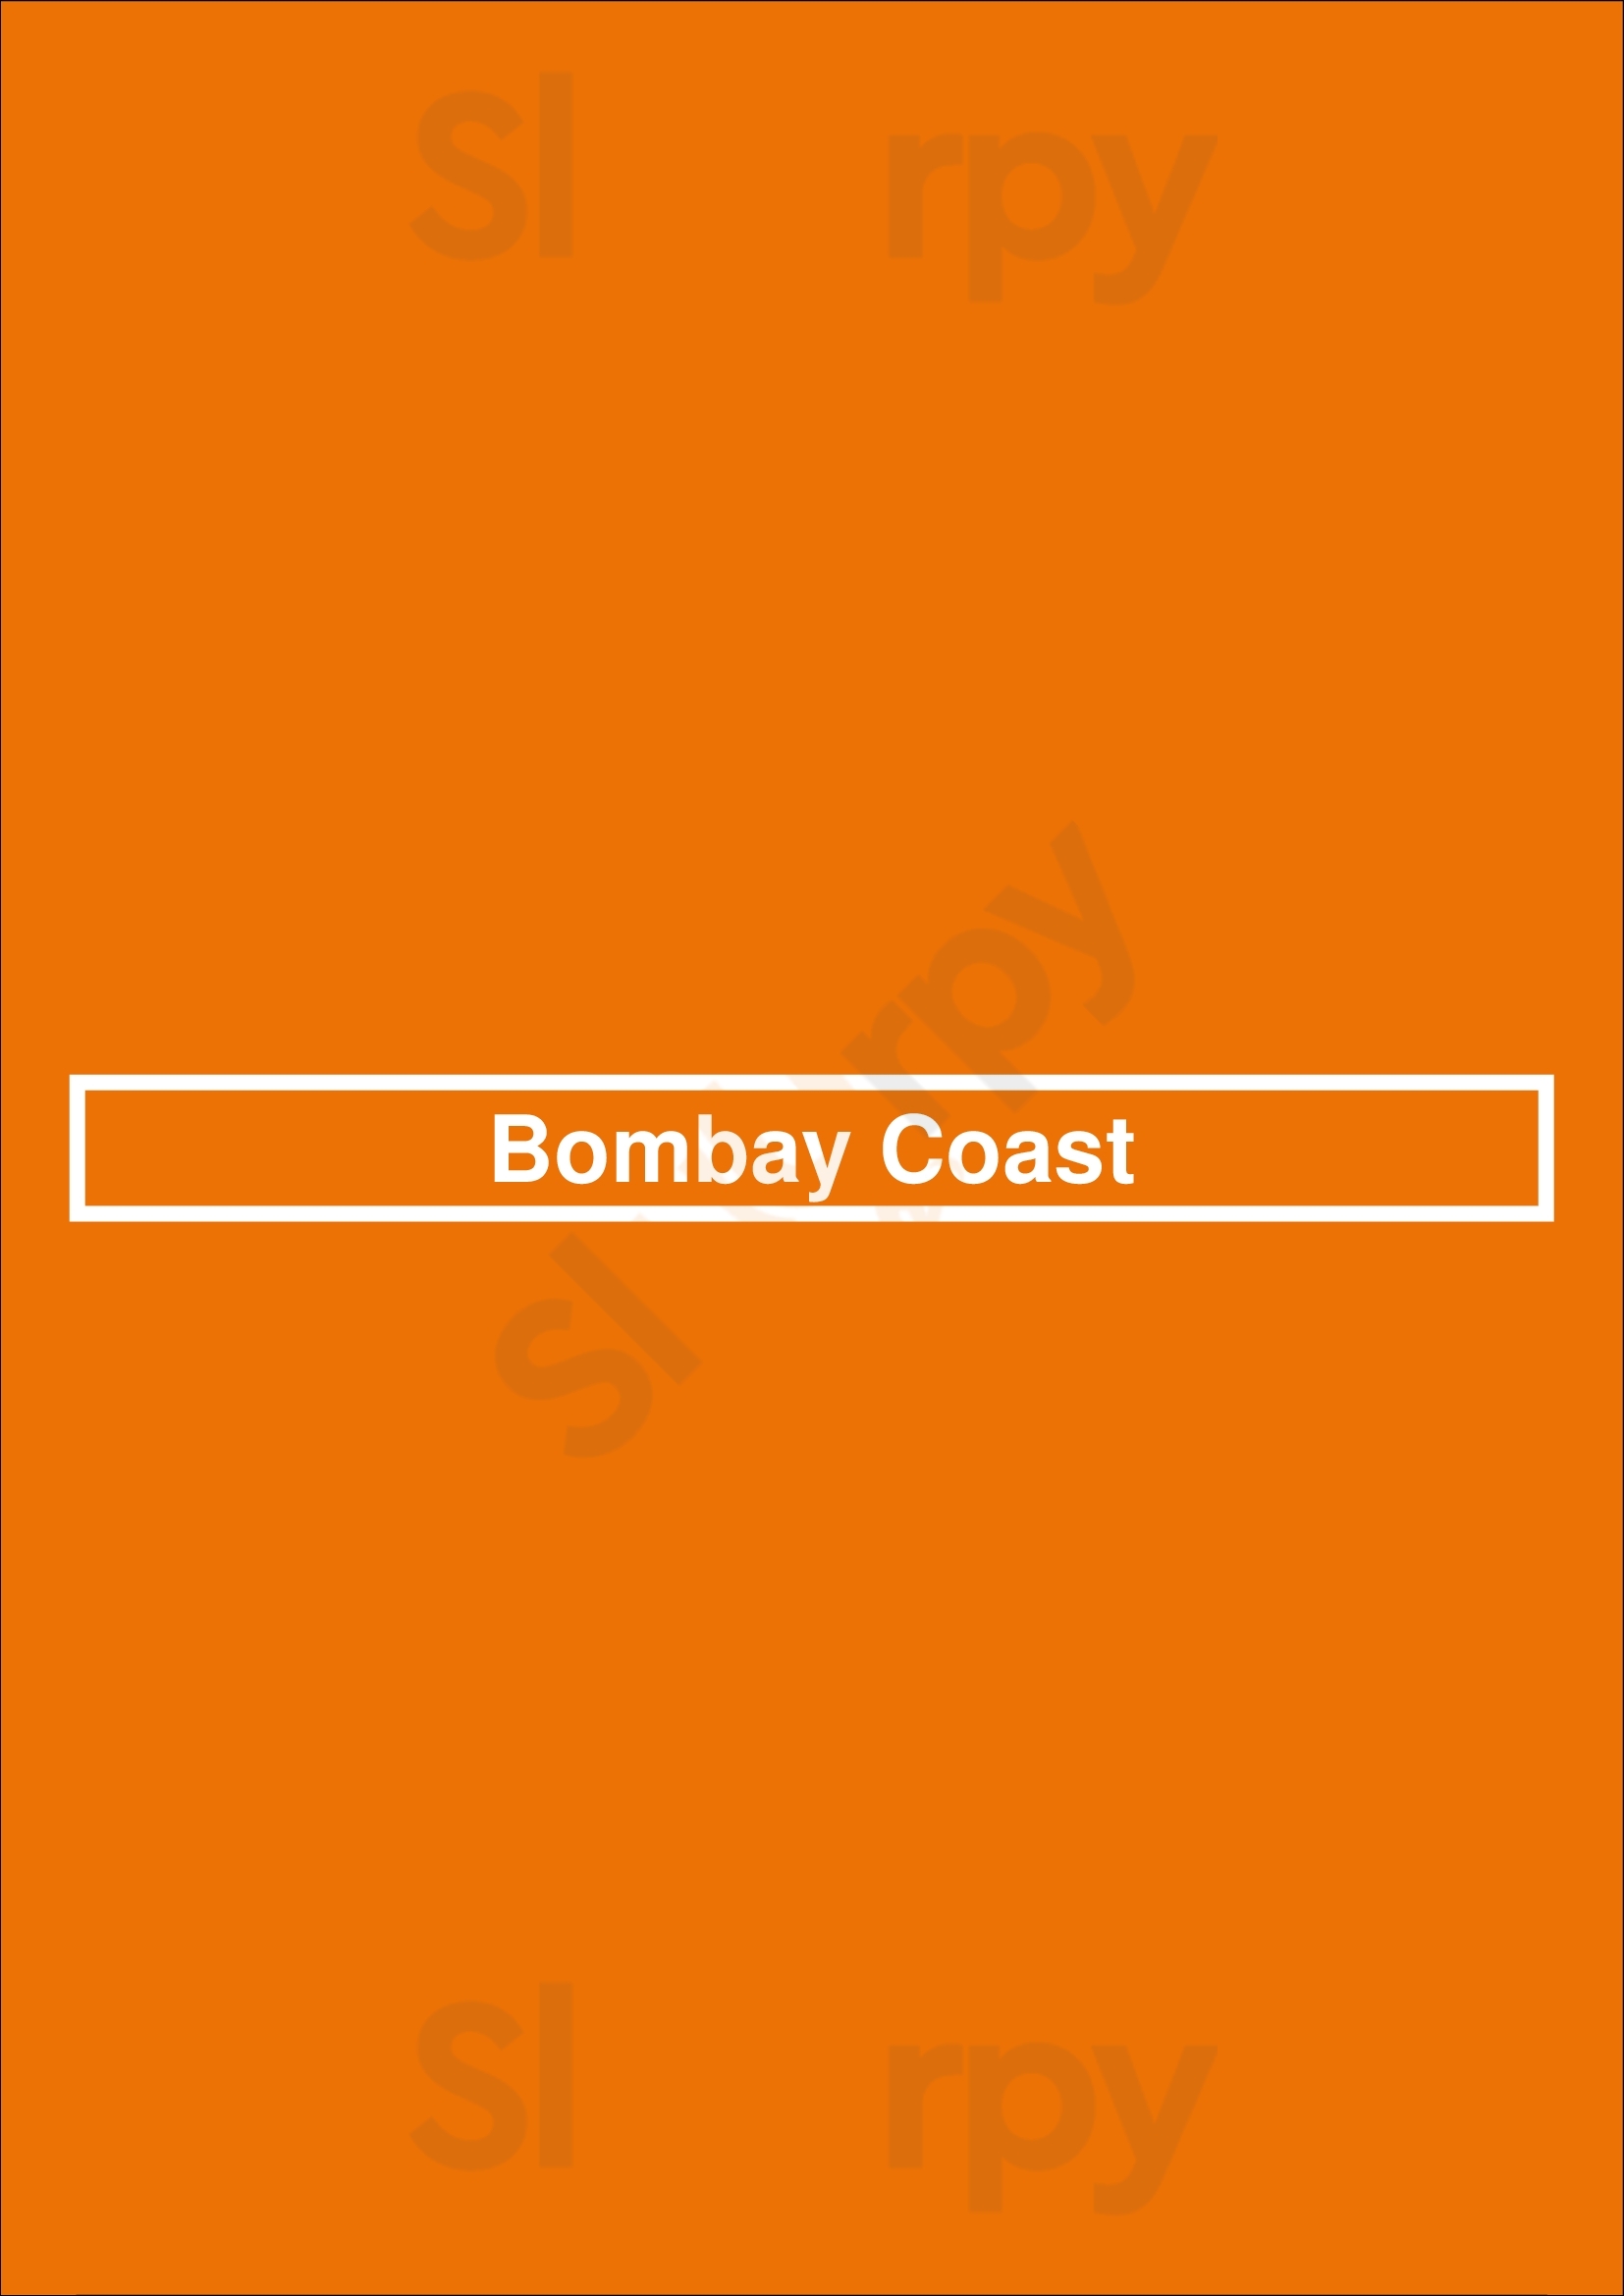 Bombay Coast San Diego Menu - 1